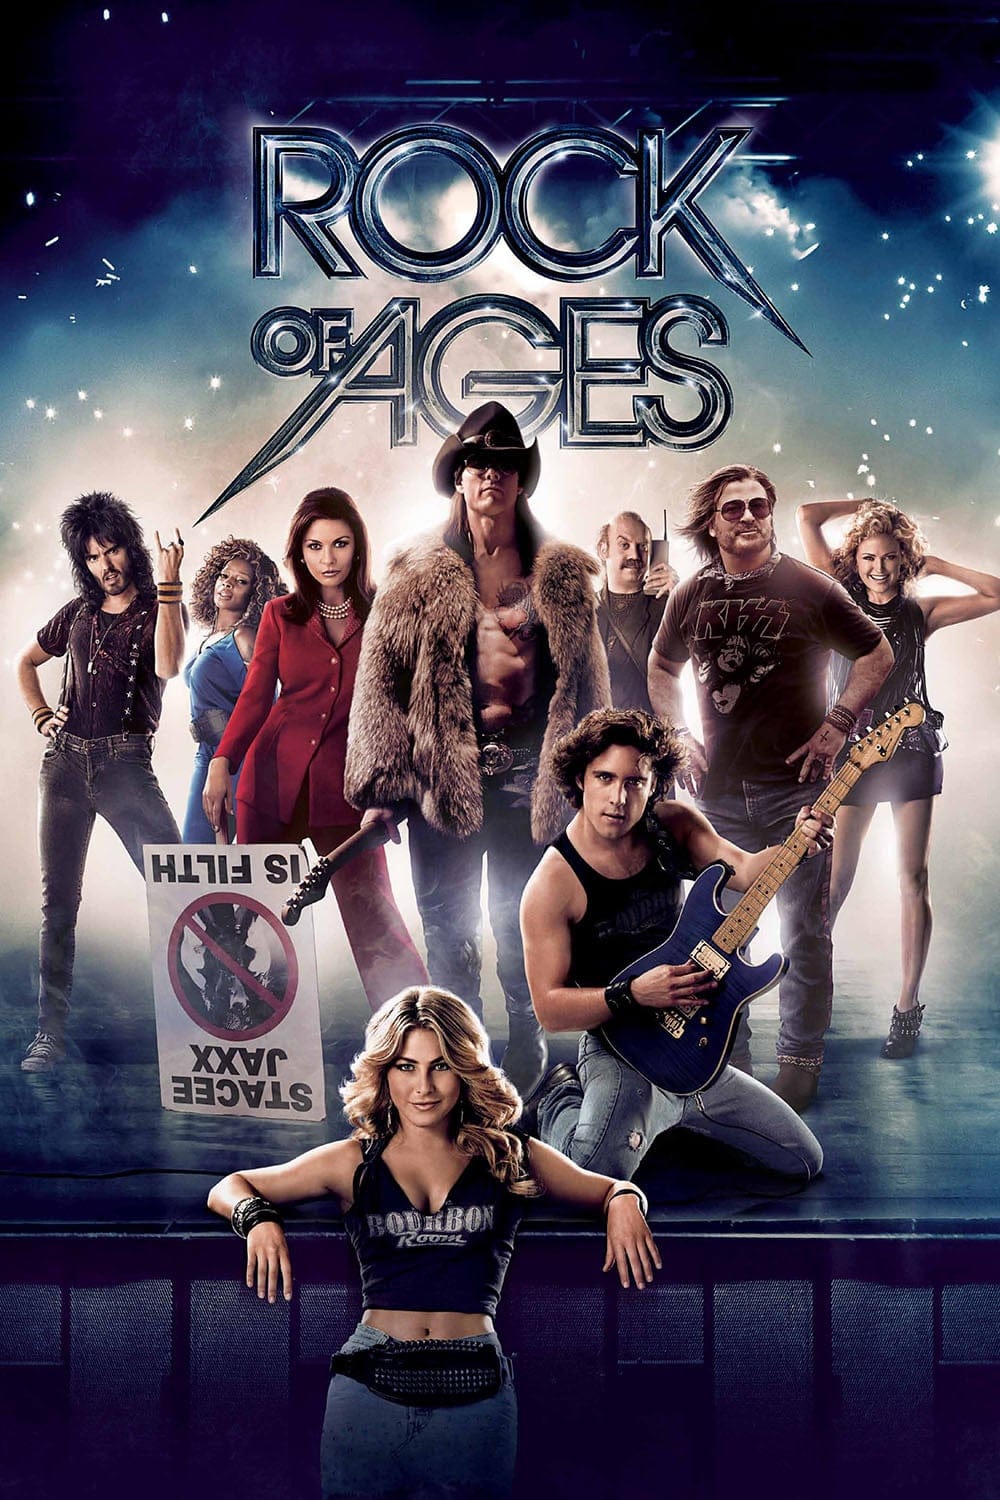 Plakat von "Rock of Ages"